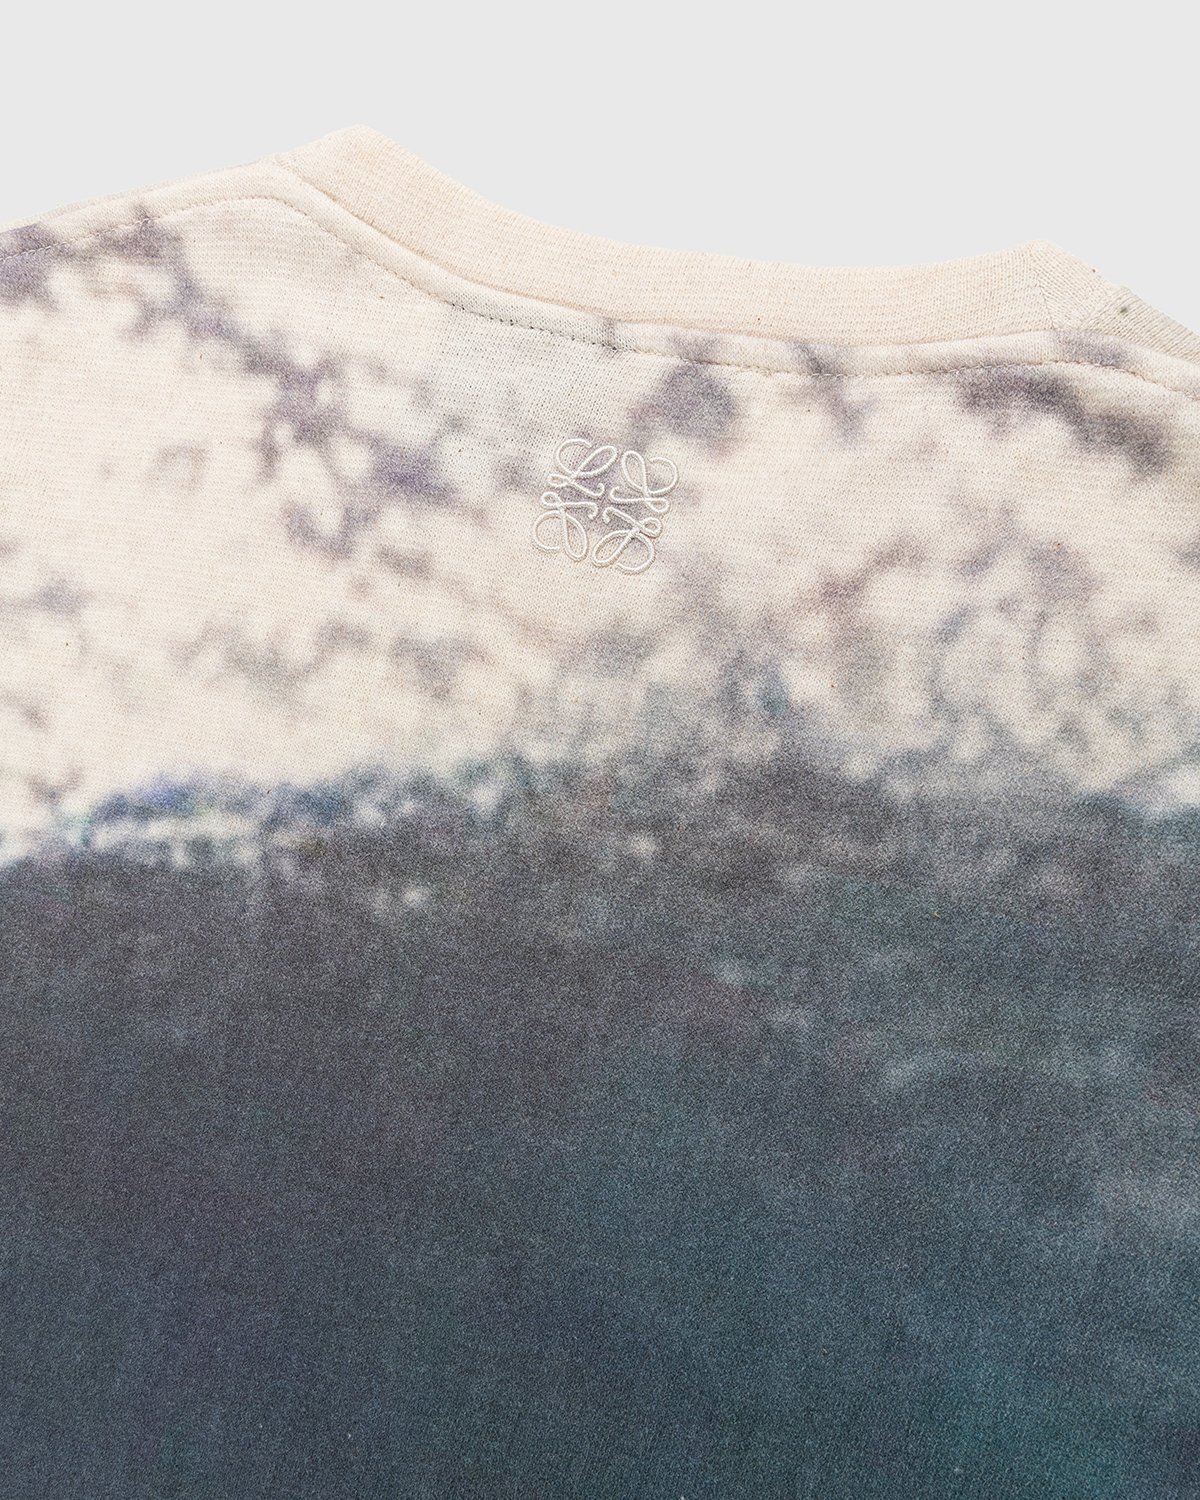 Loewe – Paula's Ibiza Surf Print T-Shirt Ecru/Navy Blue - Tops - Multi - Image 3